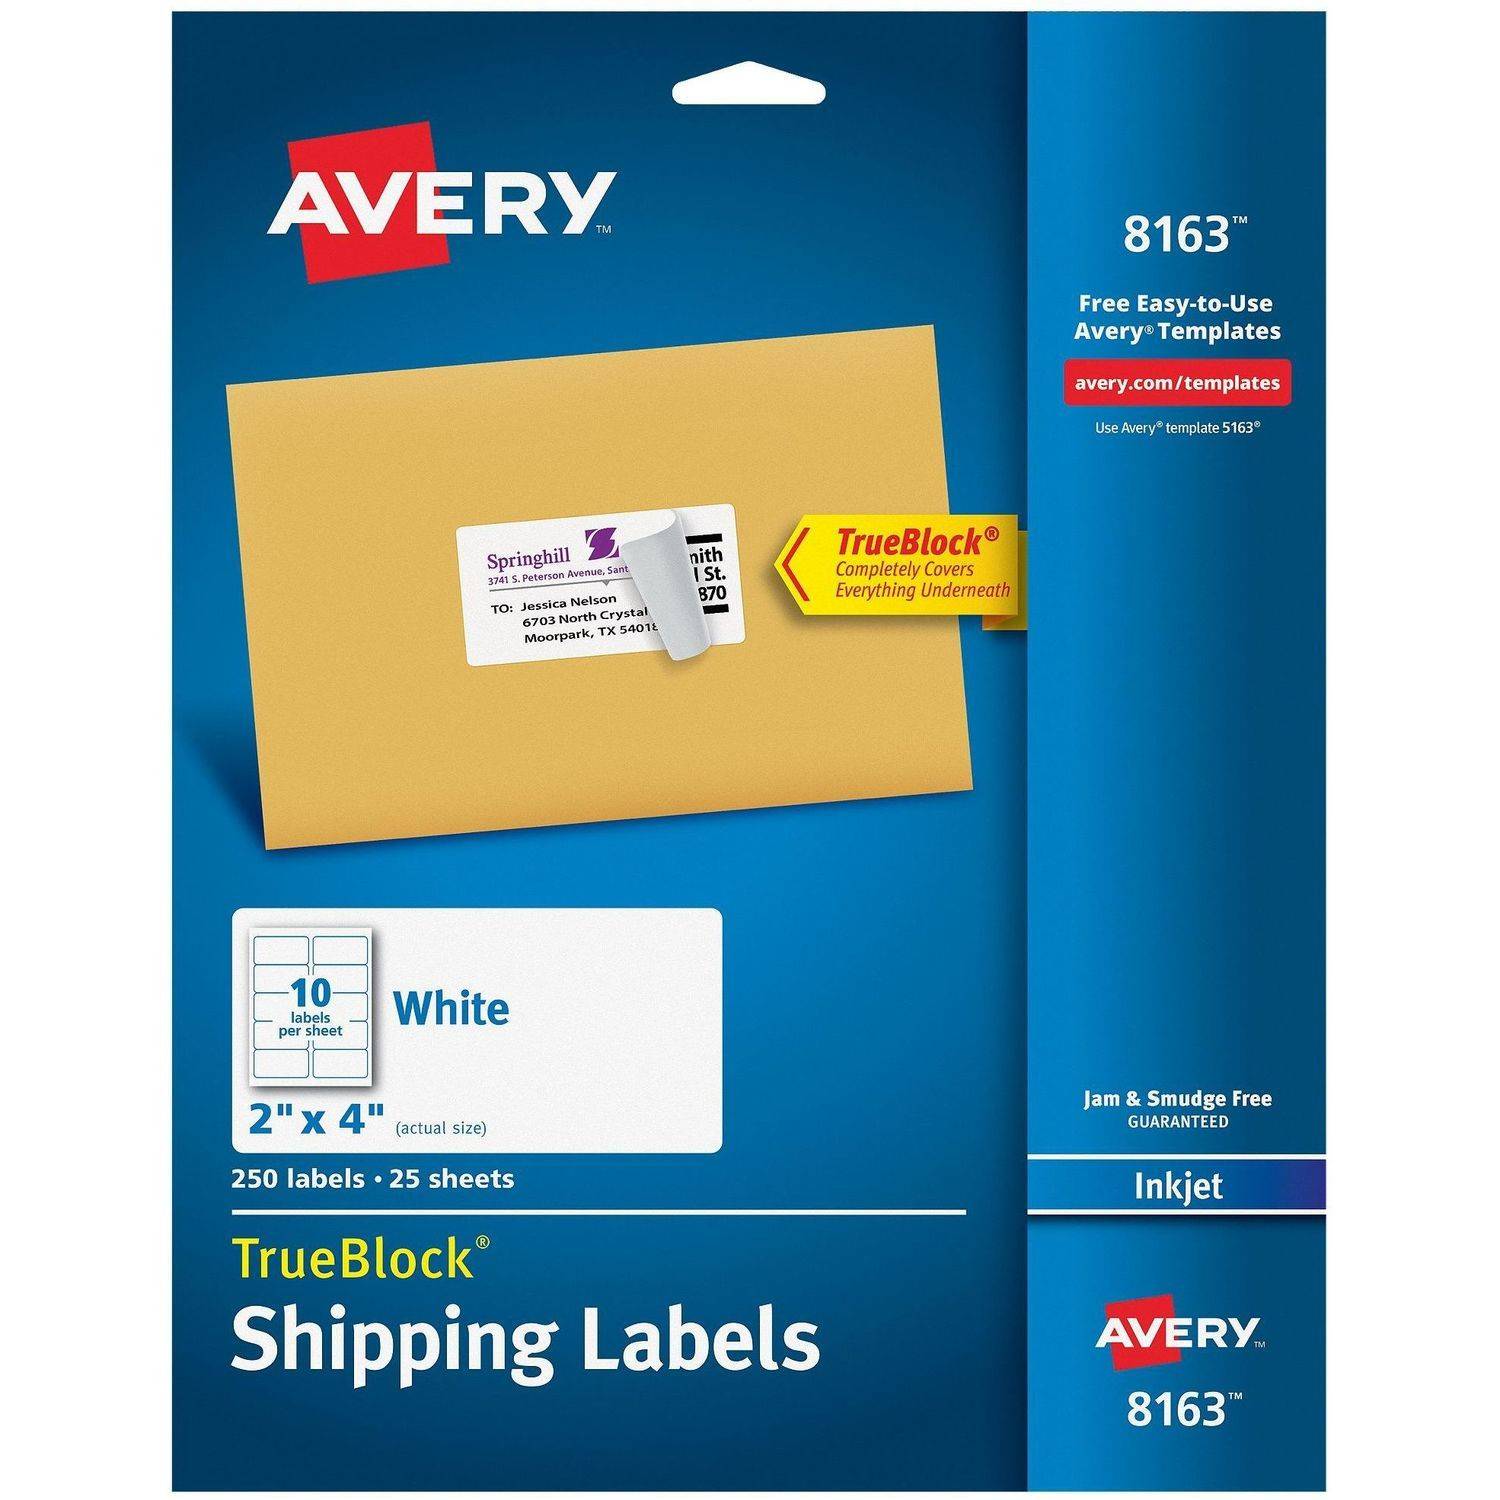 2 X 4, laser Ink Jet Printer Shipping Labels, Avery 5163 - White, 1000/Pkg